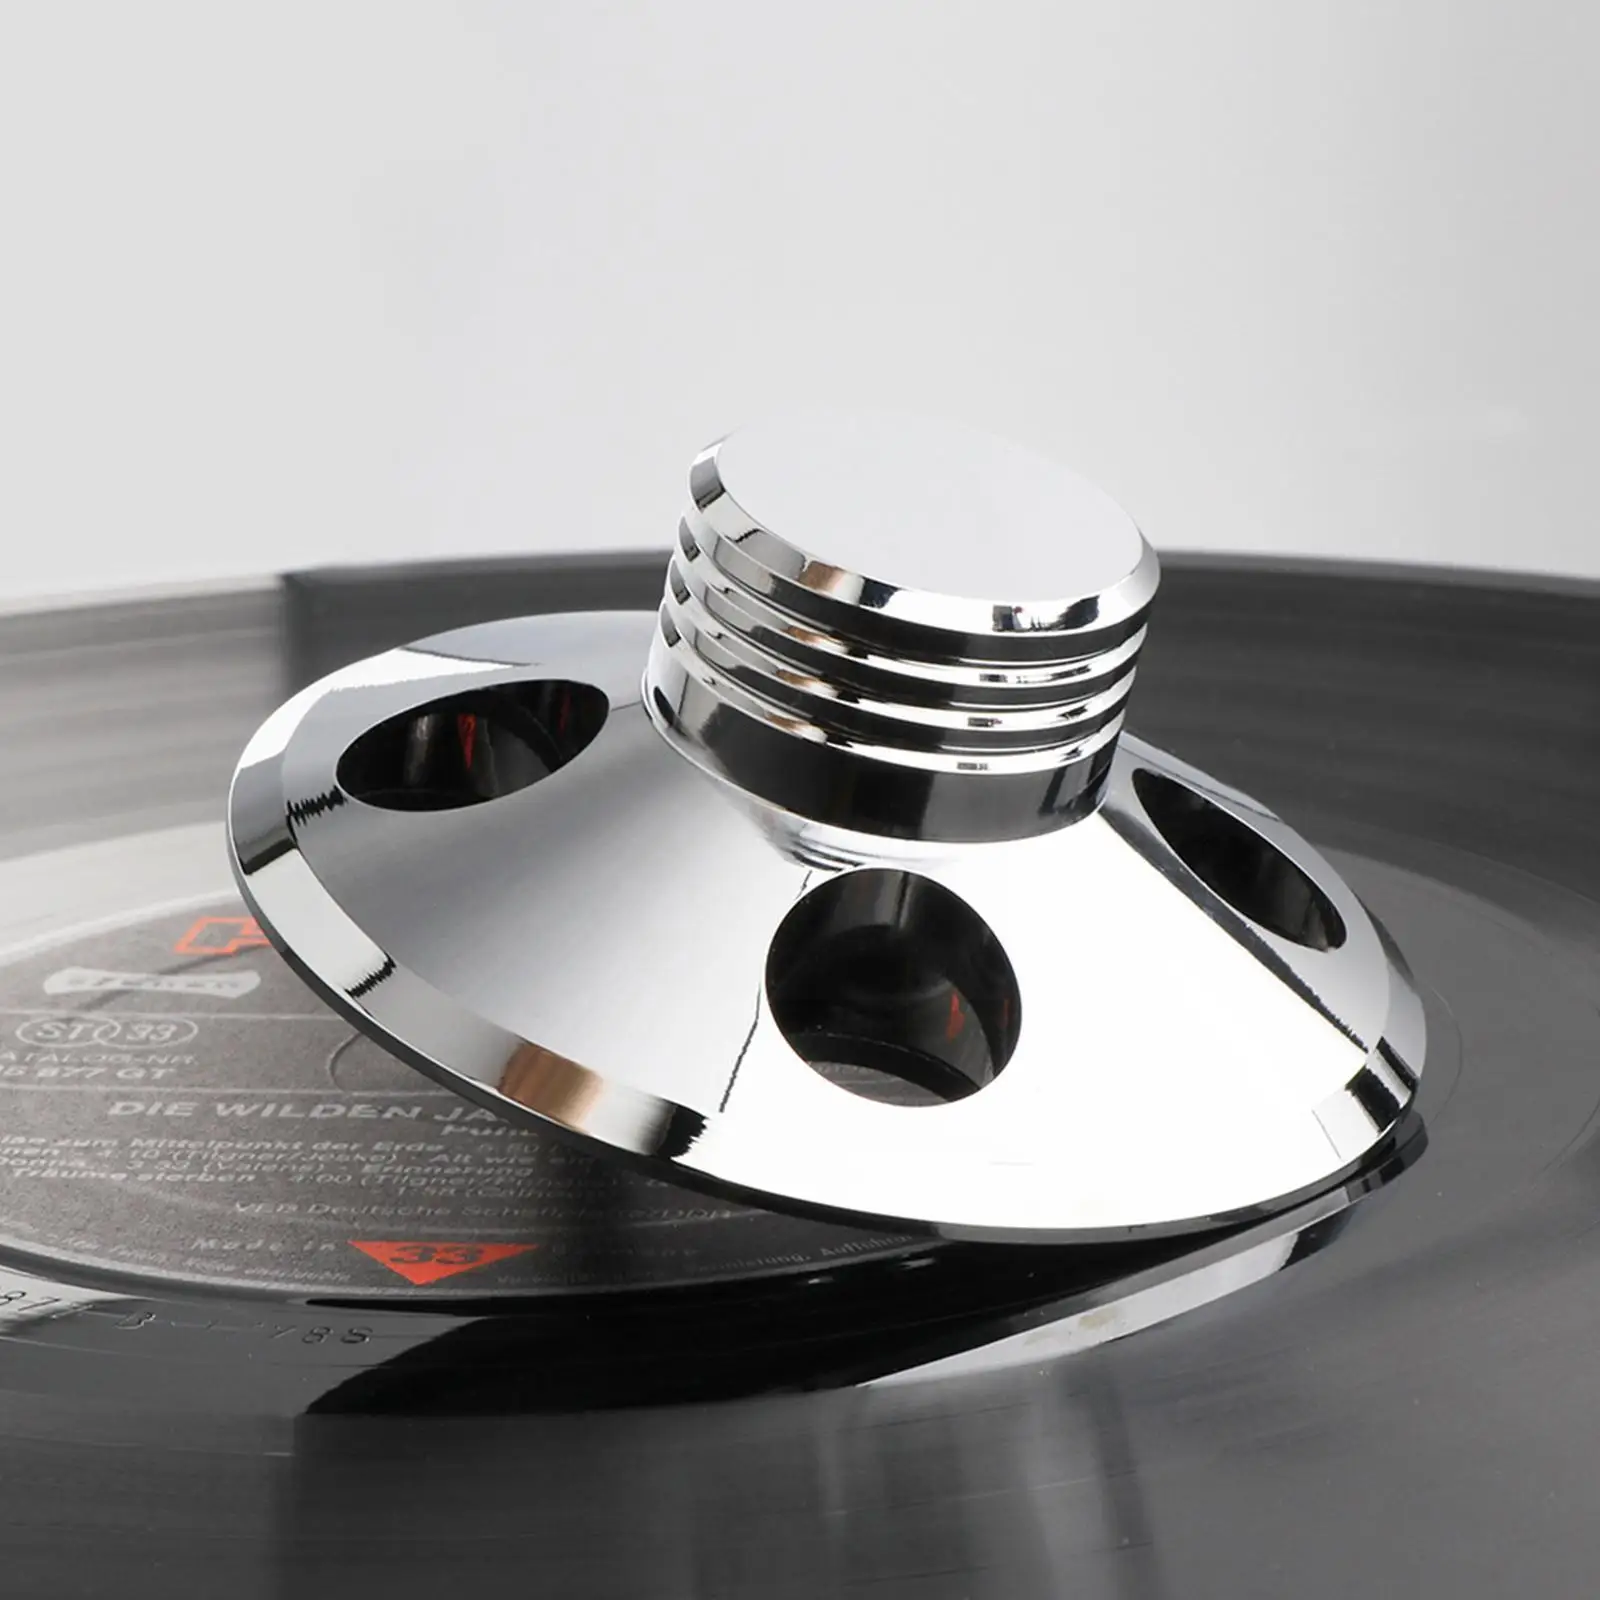 New Audio LP Vinyl Turntables Metal Disc Stabilizer Player Hifi Clamp Weight Recorder Accessories Smart Equipment